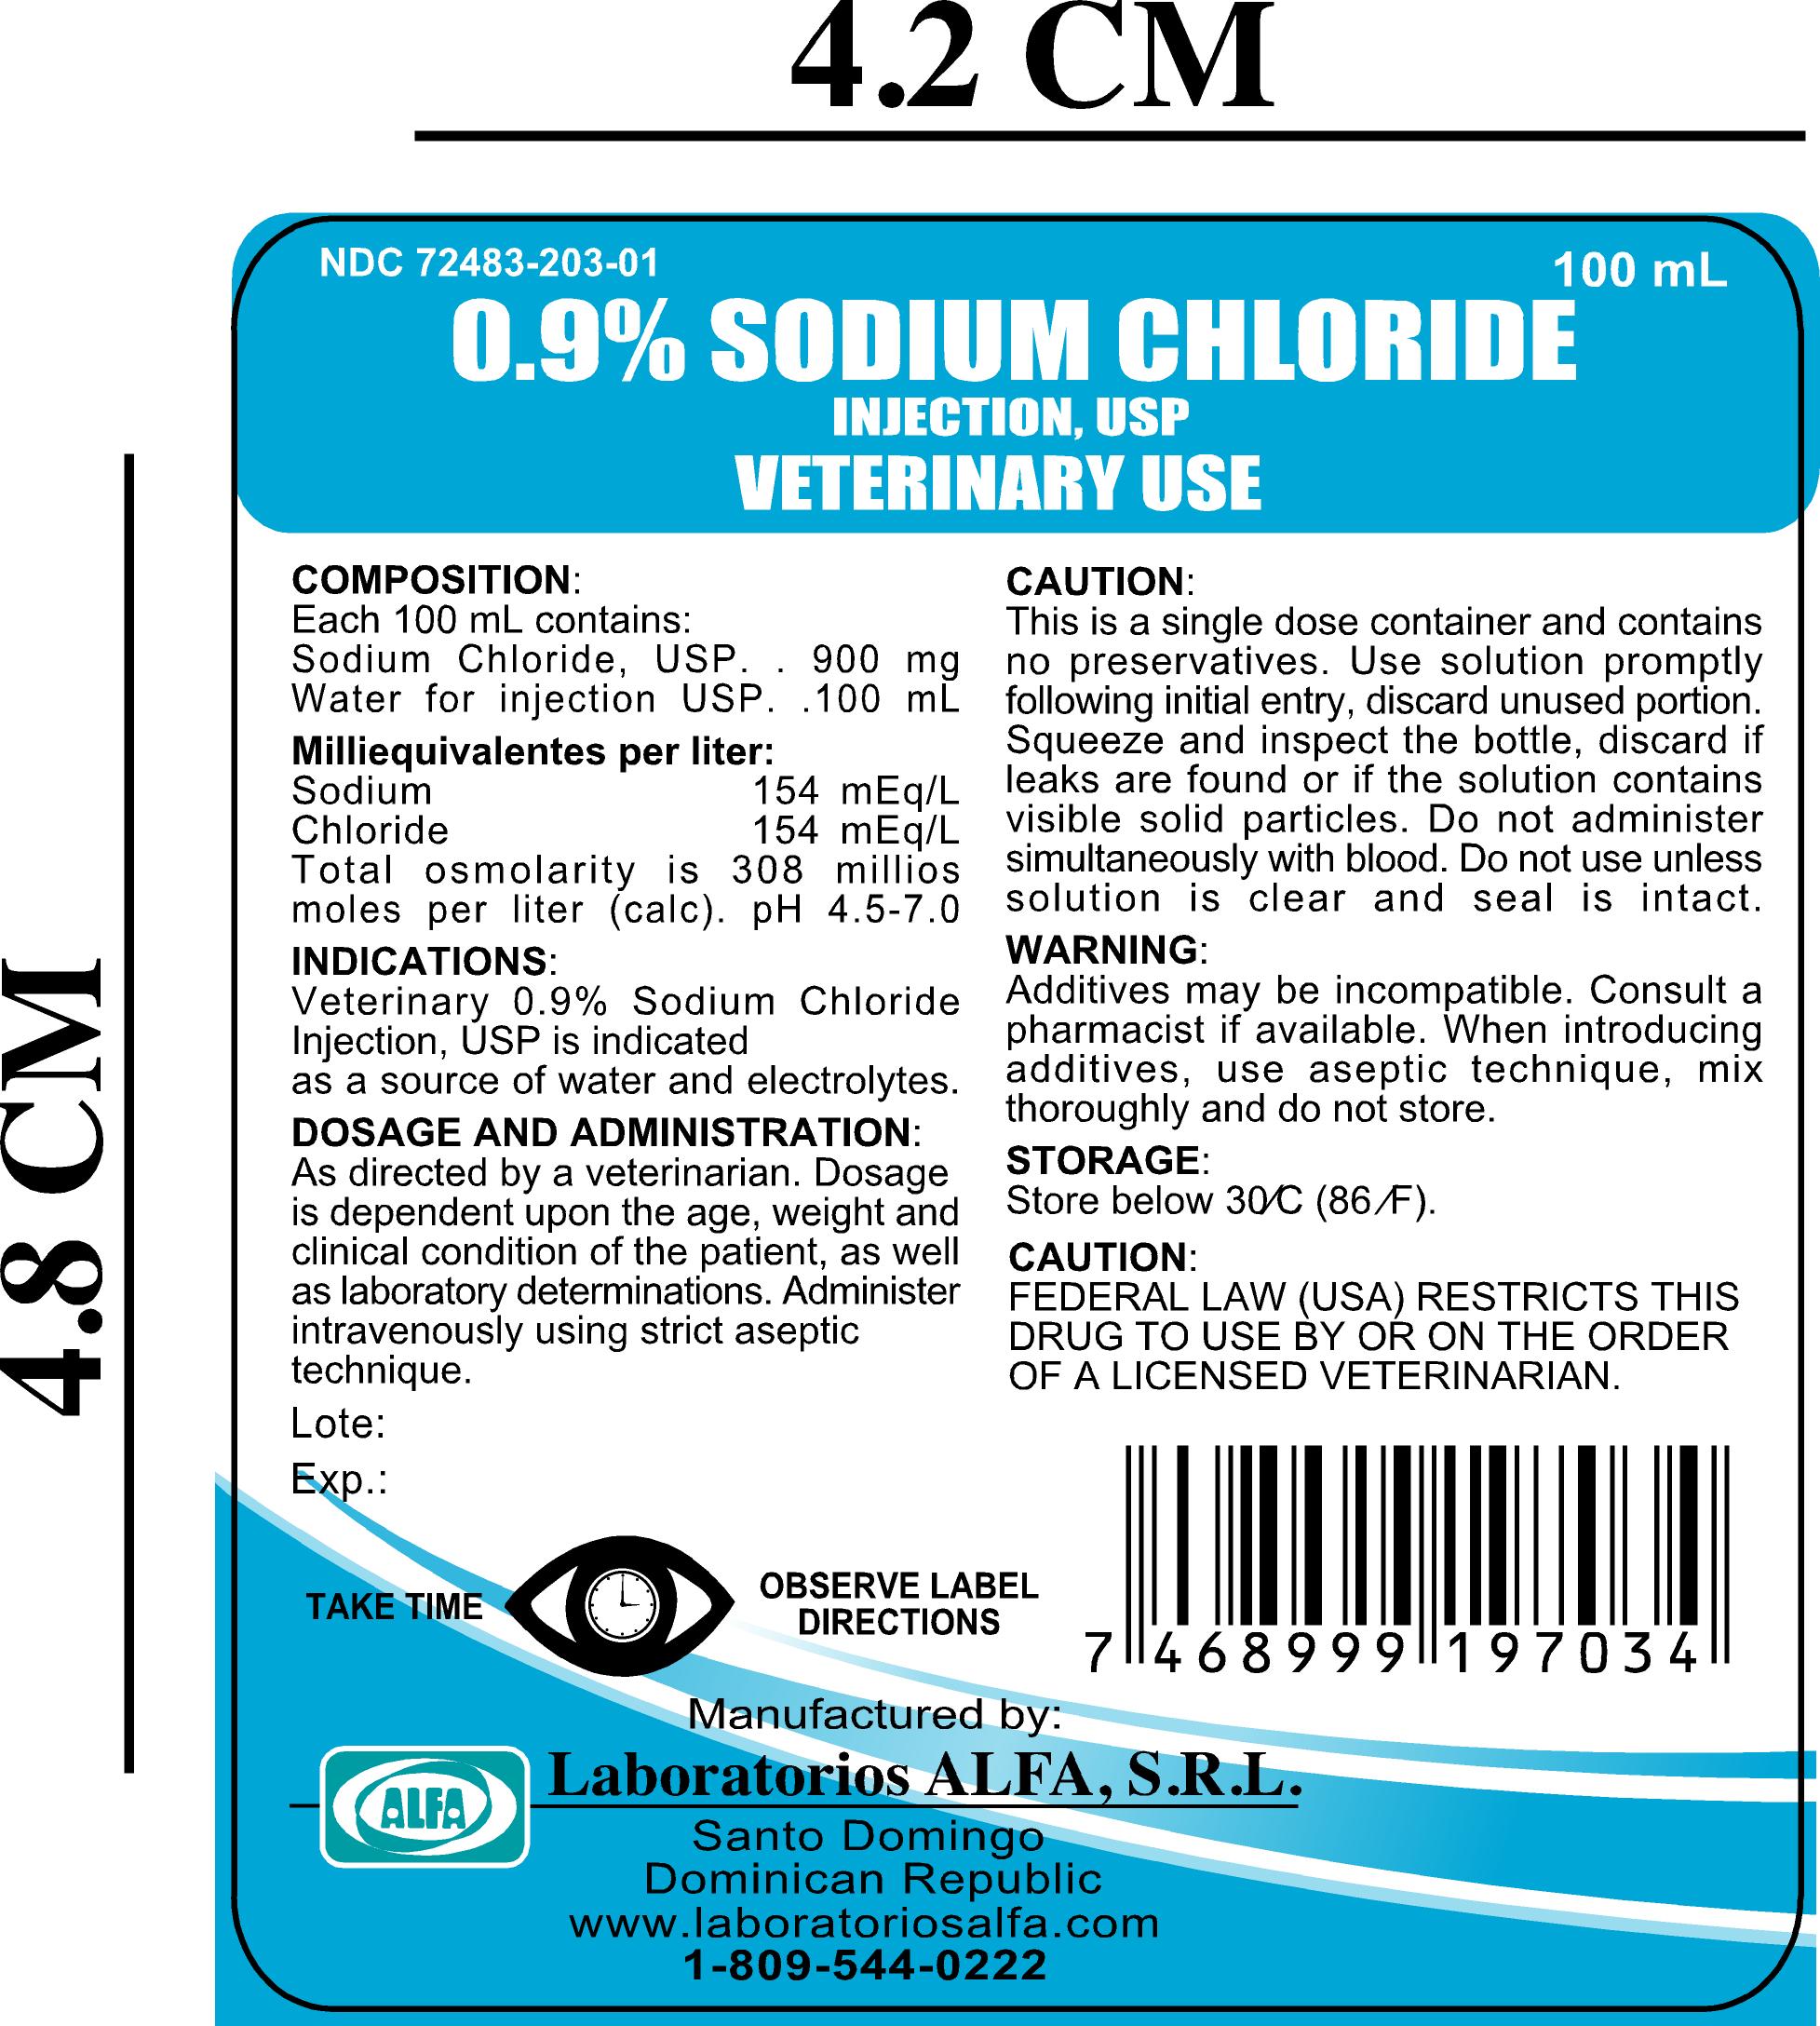 Veterinary 0.9% Sodium Chloride Injection (100mL) description